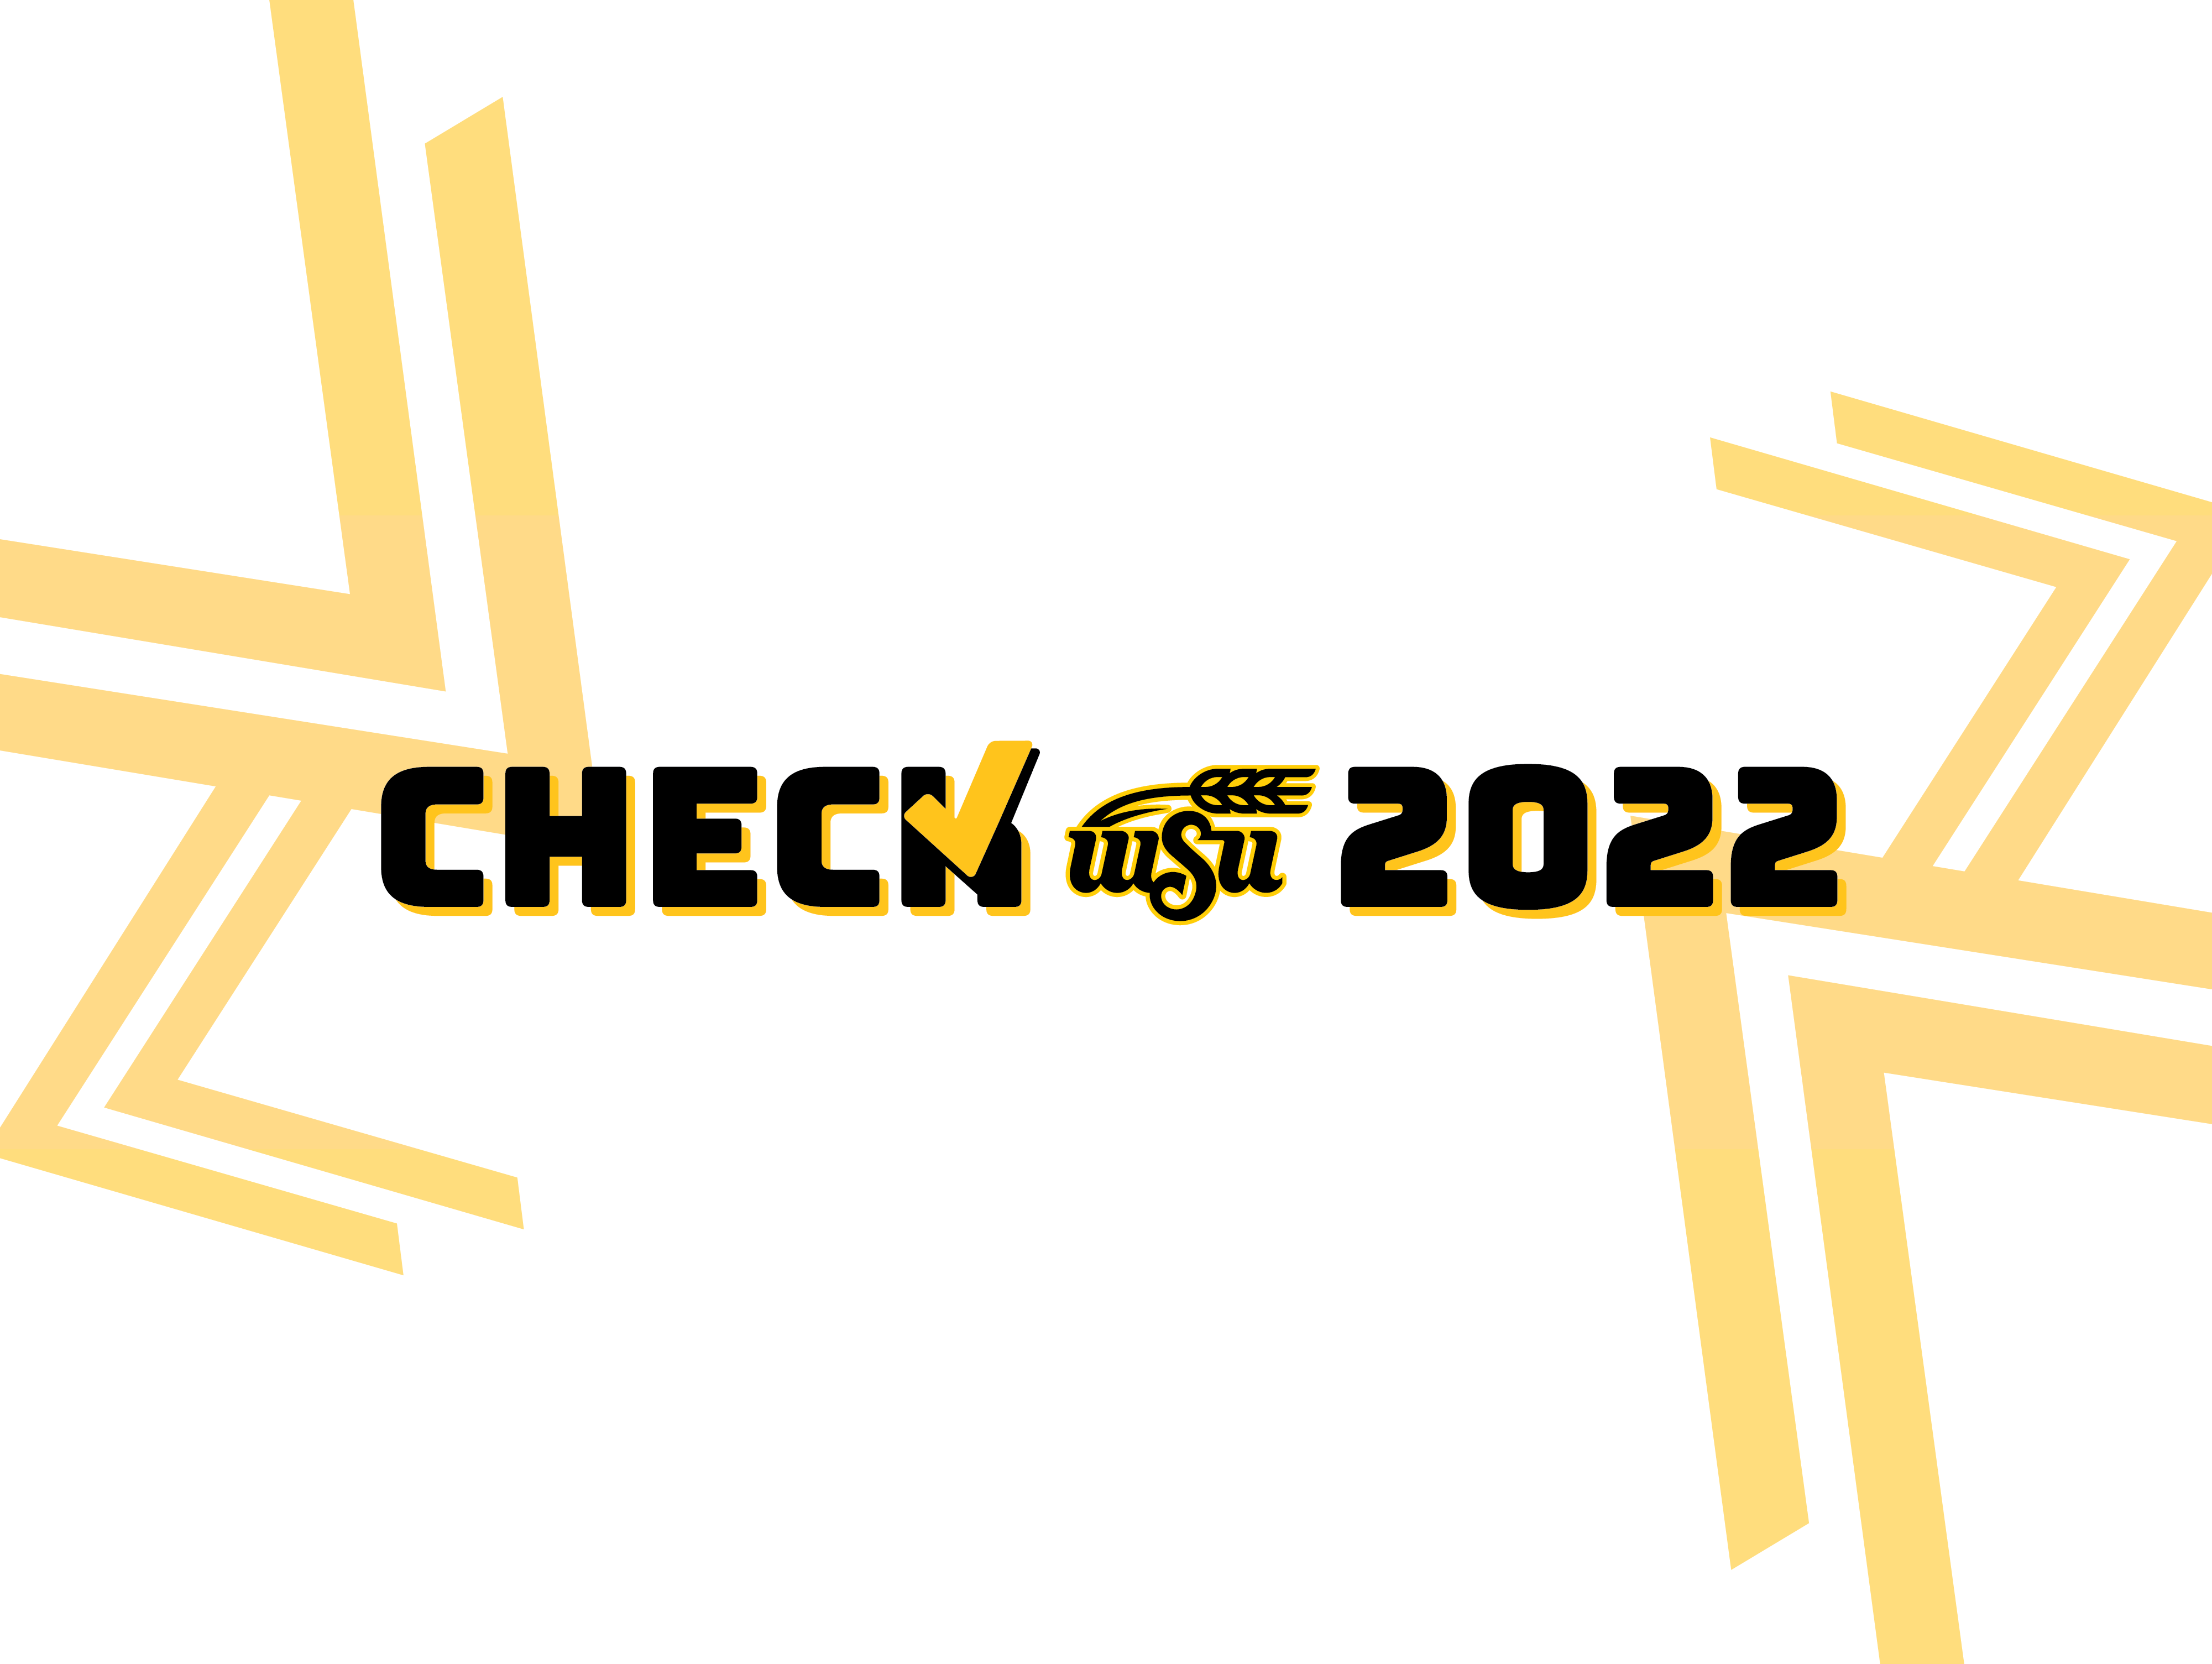 CHECK CONFERENCE 2022 logo hero